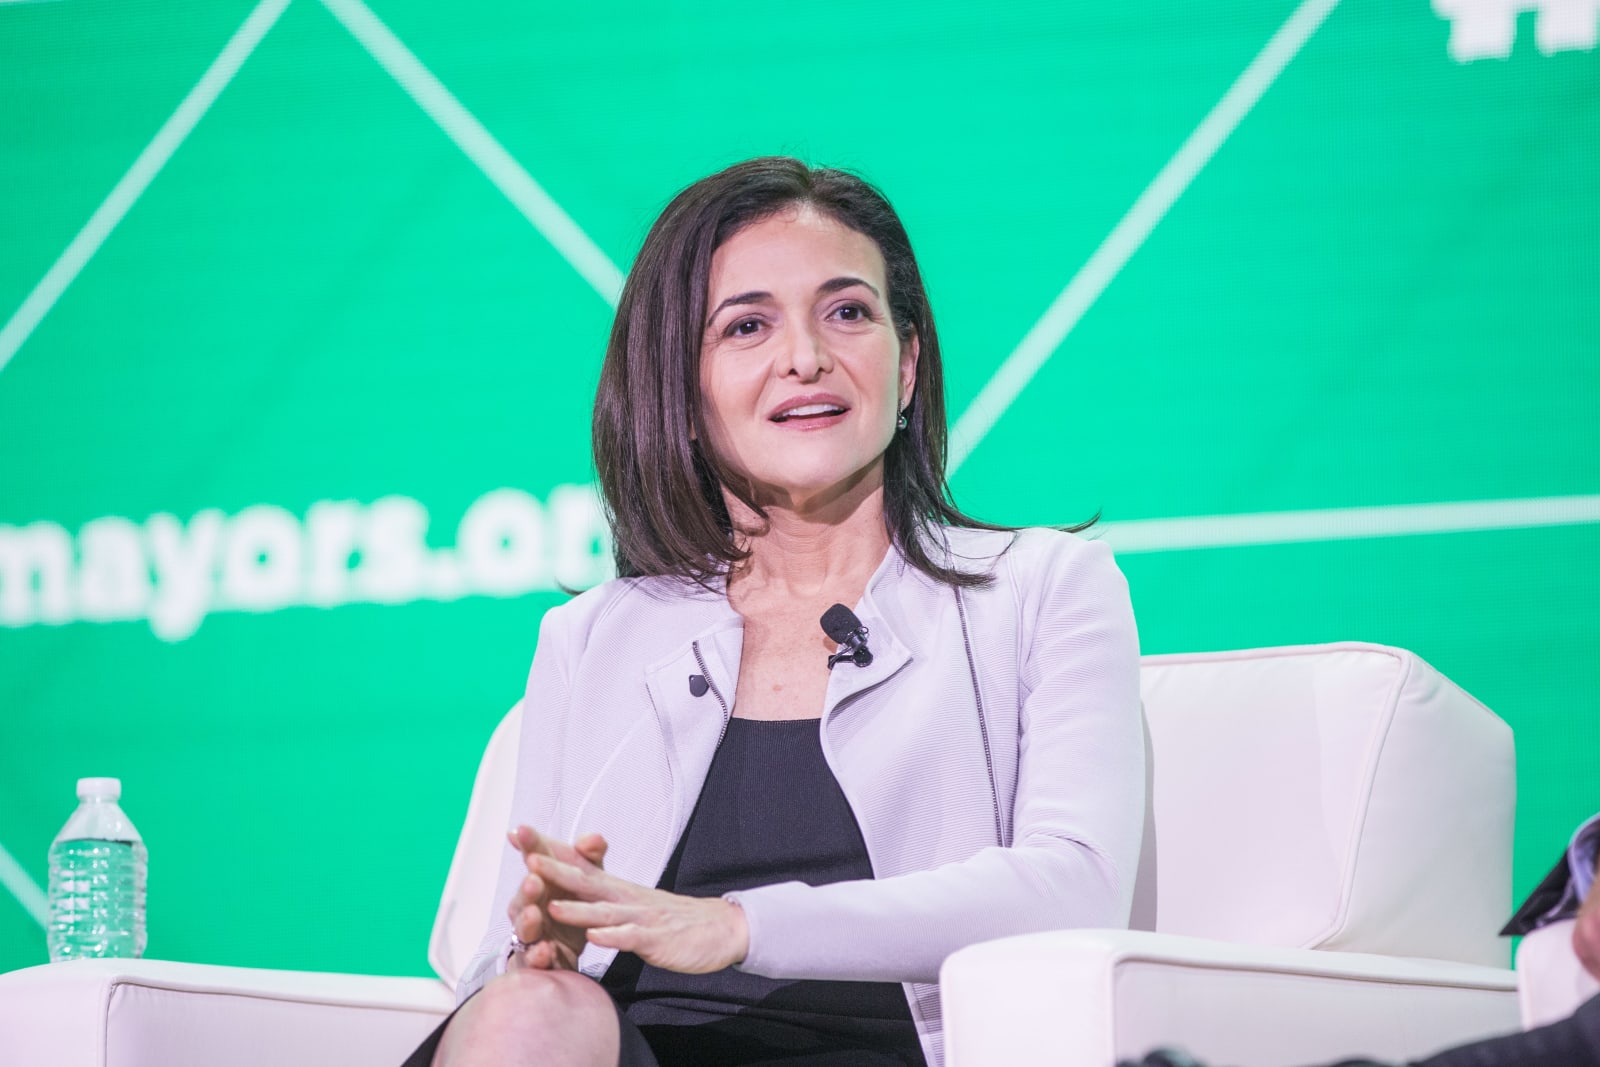 Facebook's Sheryl Sandberg Addresses The U.S. Conference Of Mayors In Boston